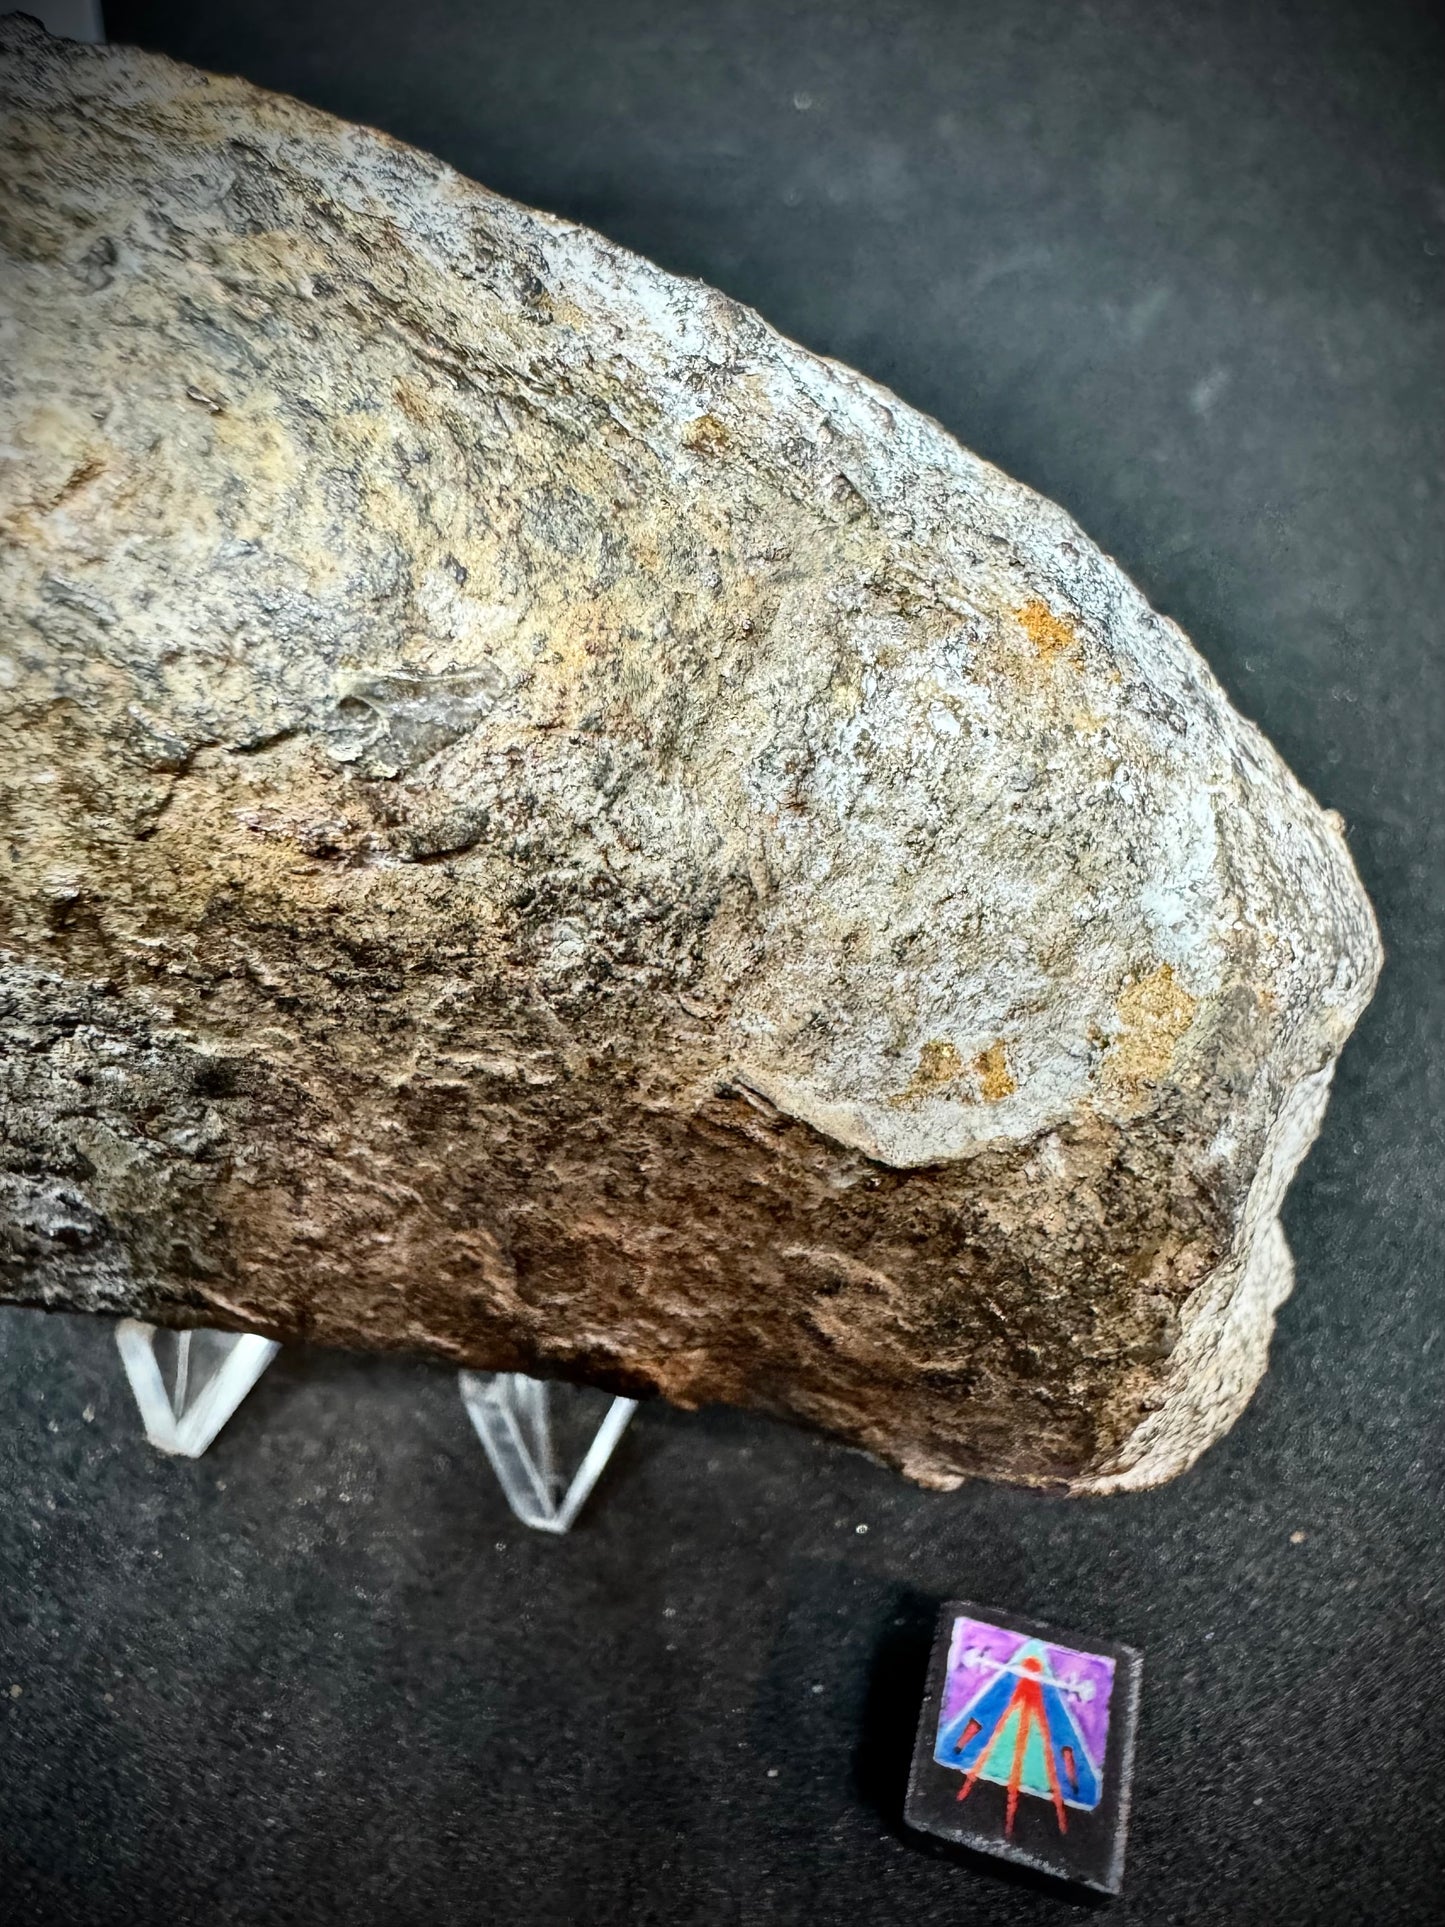 Aba Panu Meteorite - Tracked by NASA! Stunning Chondrules - 242.9g